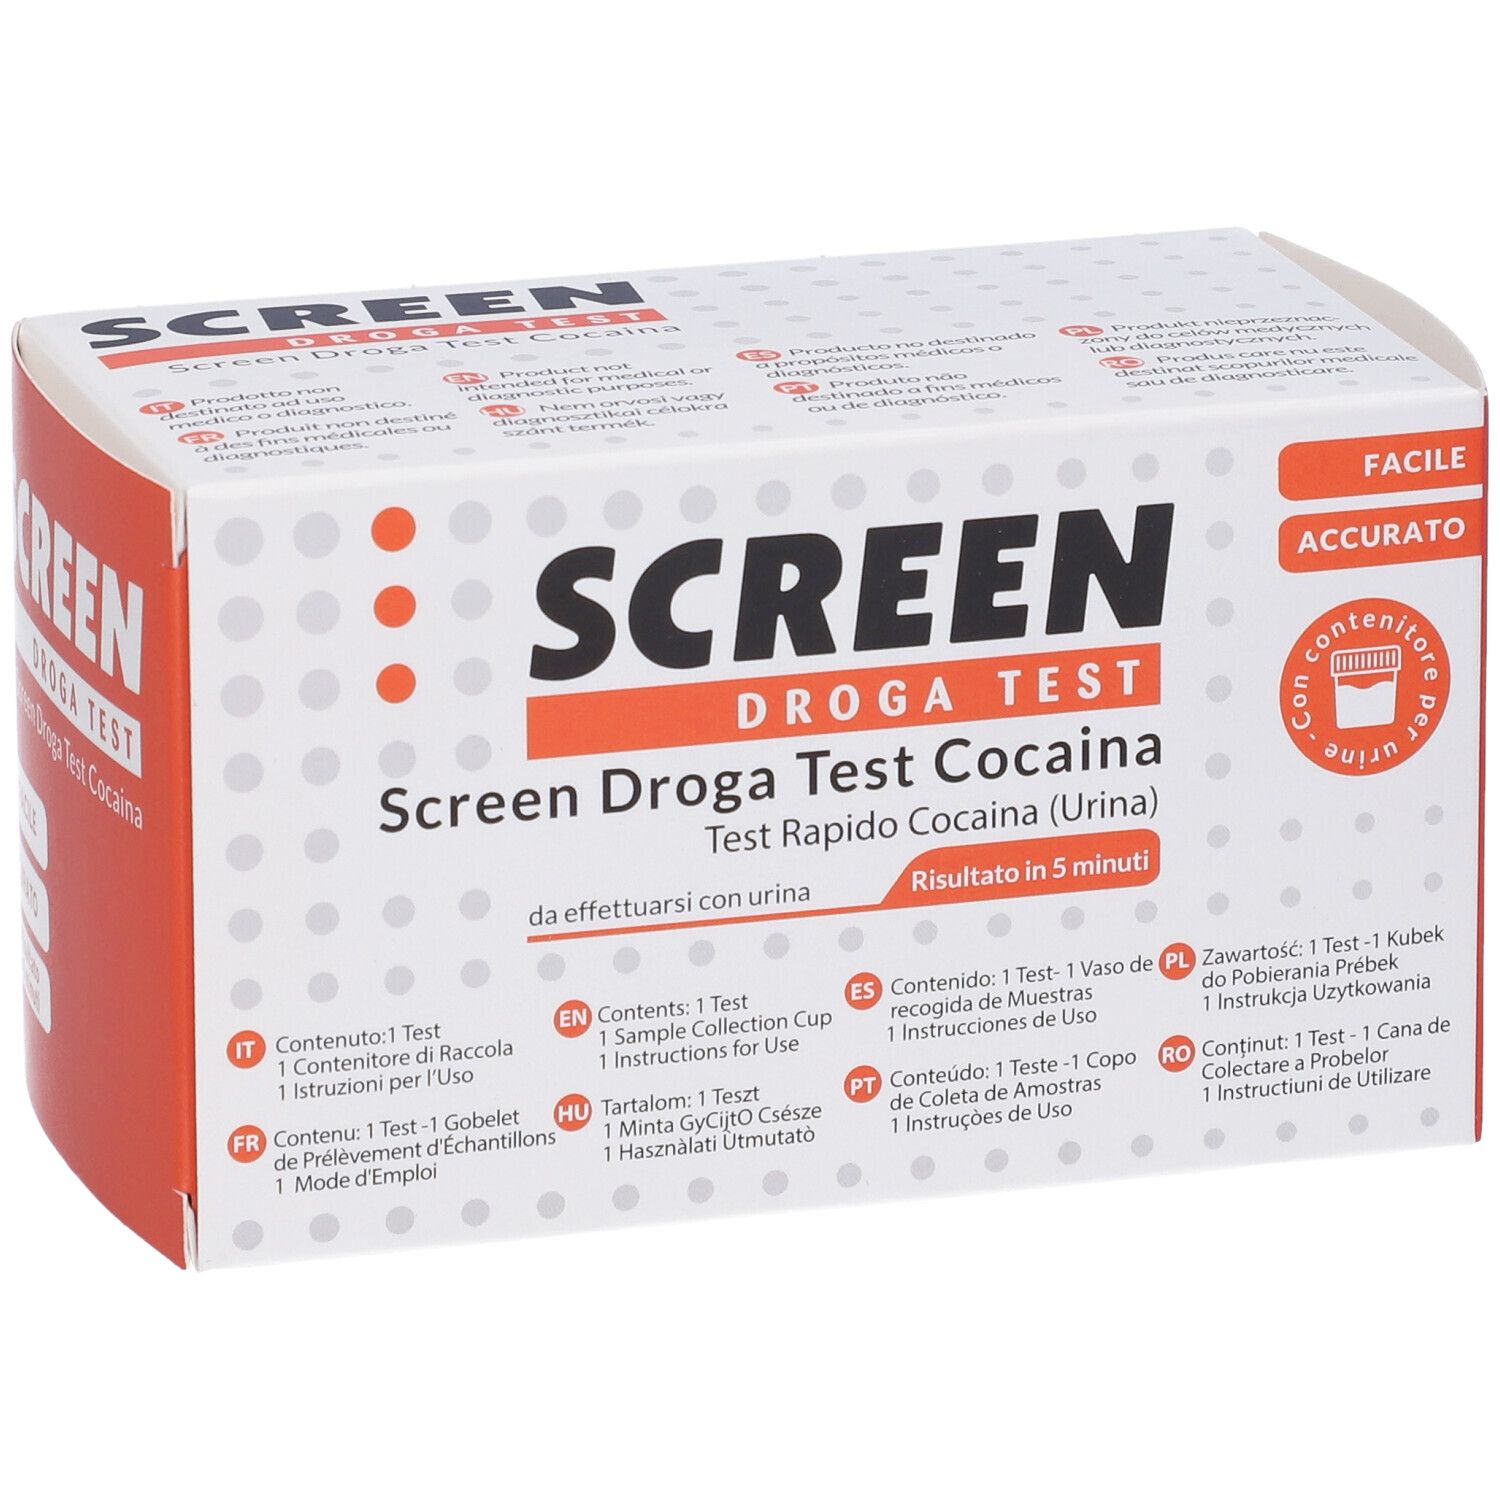 SCREEN® Droga Test Cocaina